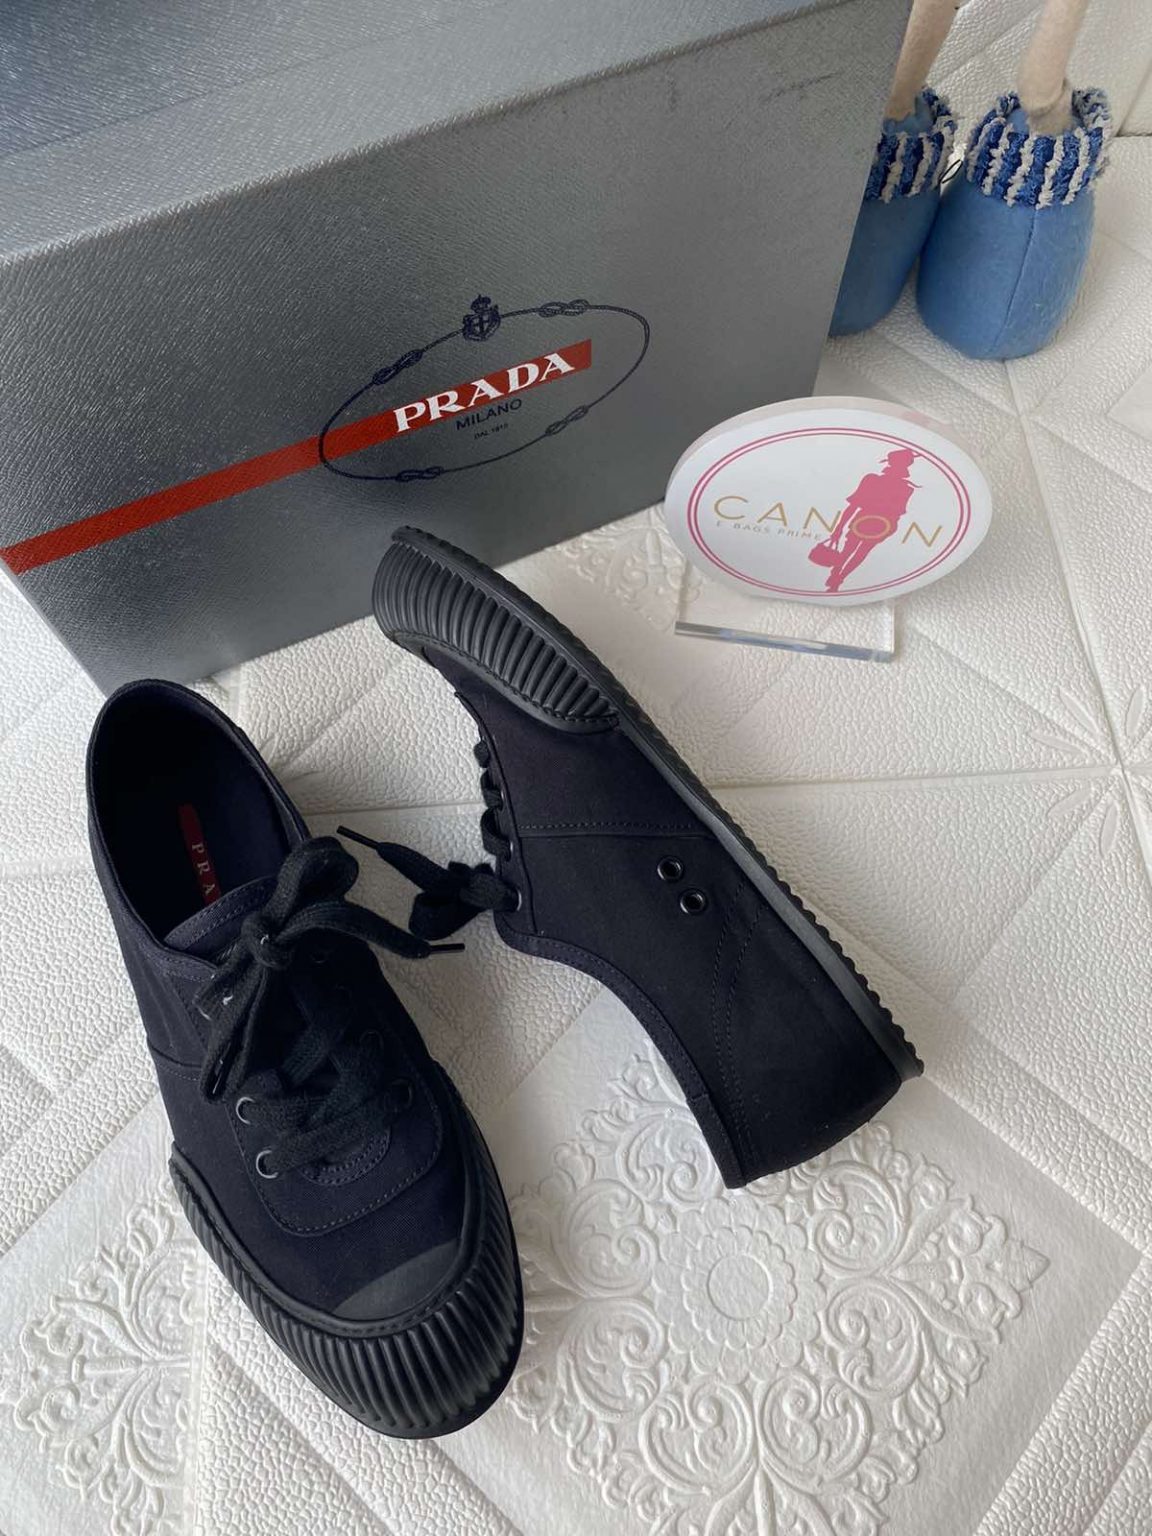 Prada Calzature Donna Nero Women’s Sneaker Size 6. Made in Italy